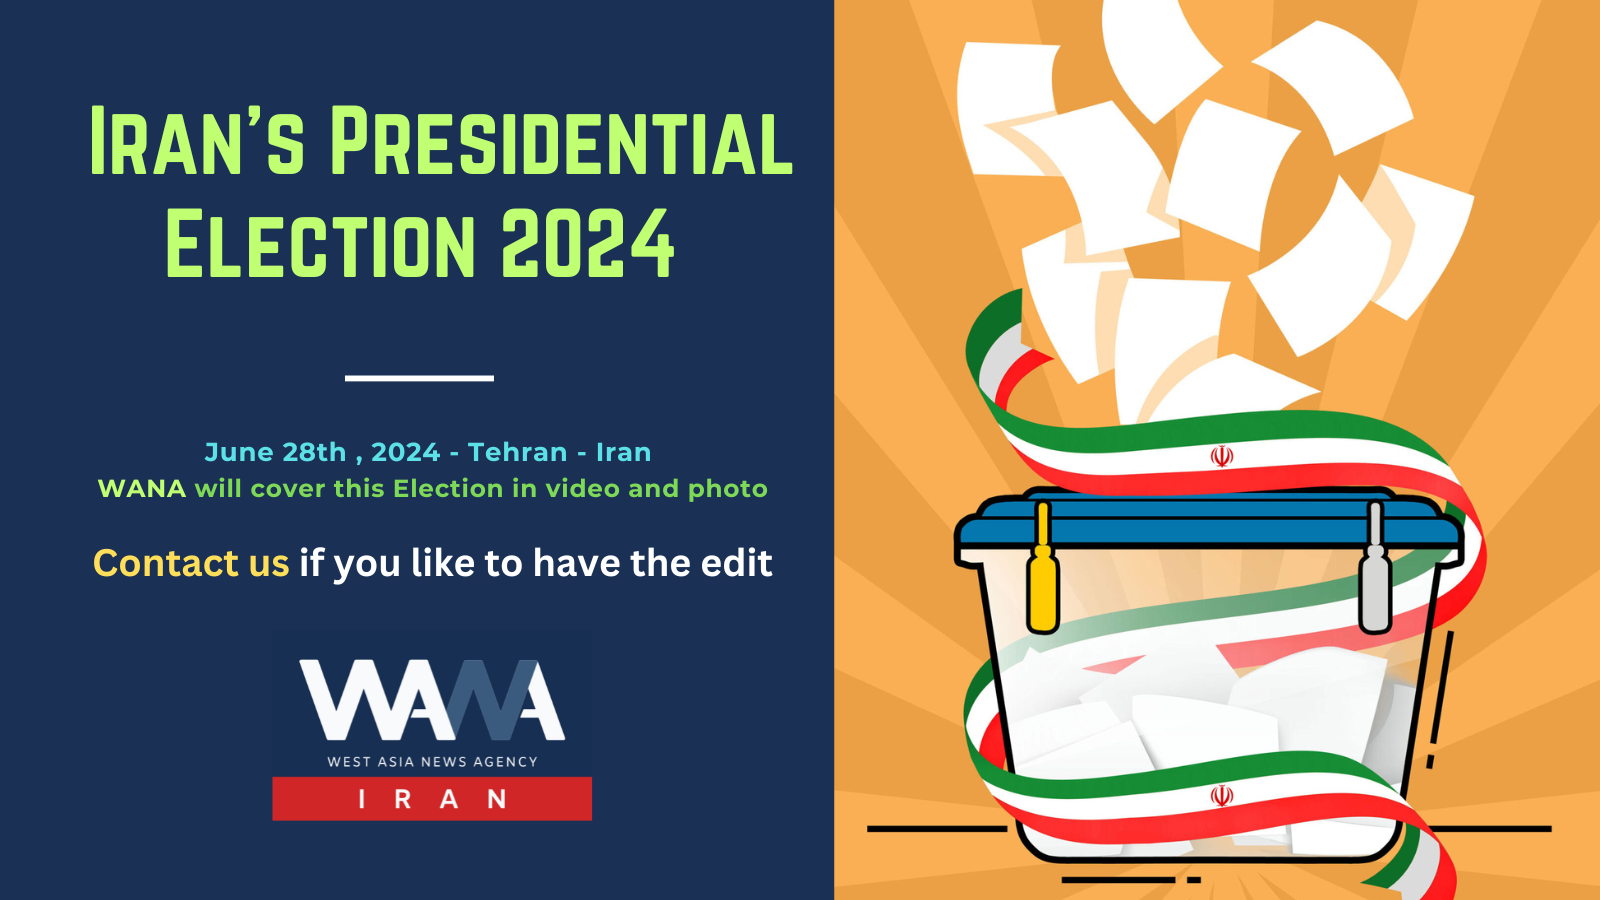 WANA - Iran's presidential election 2024